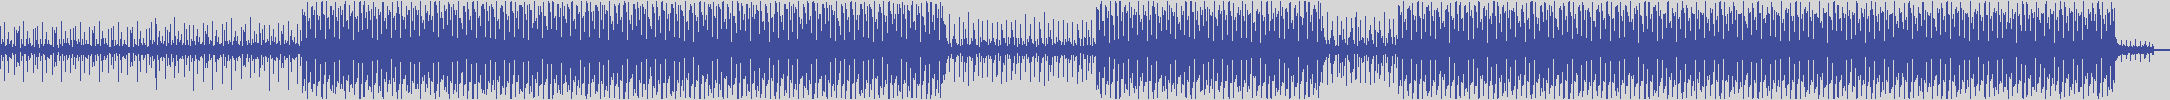 nf_boyz_records [NFY010] Ecan Carter - Dvd Video [Tribal Mix] audio wave form